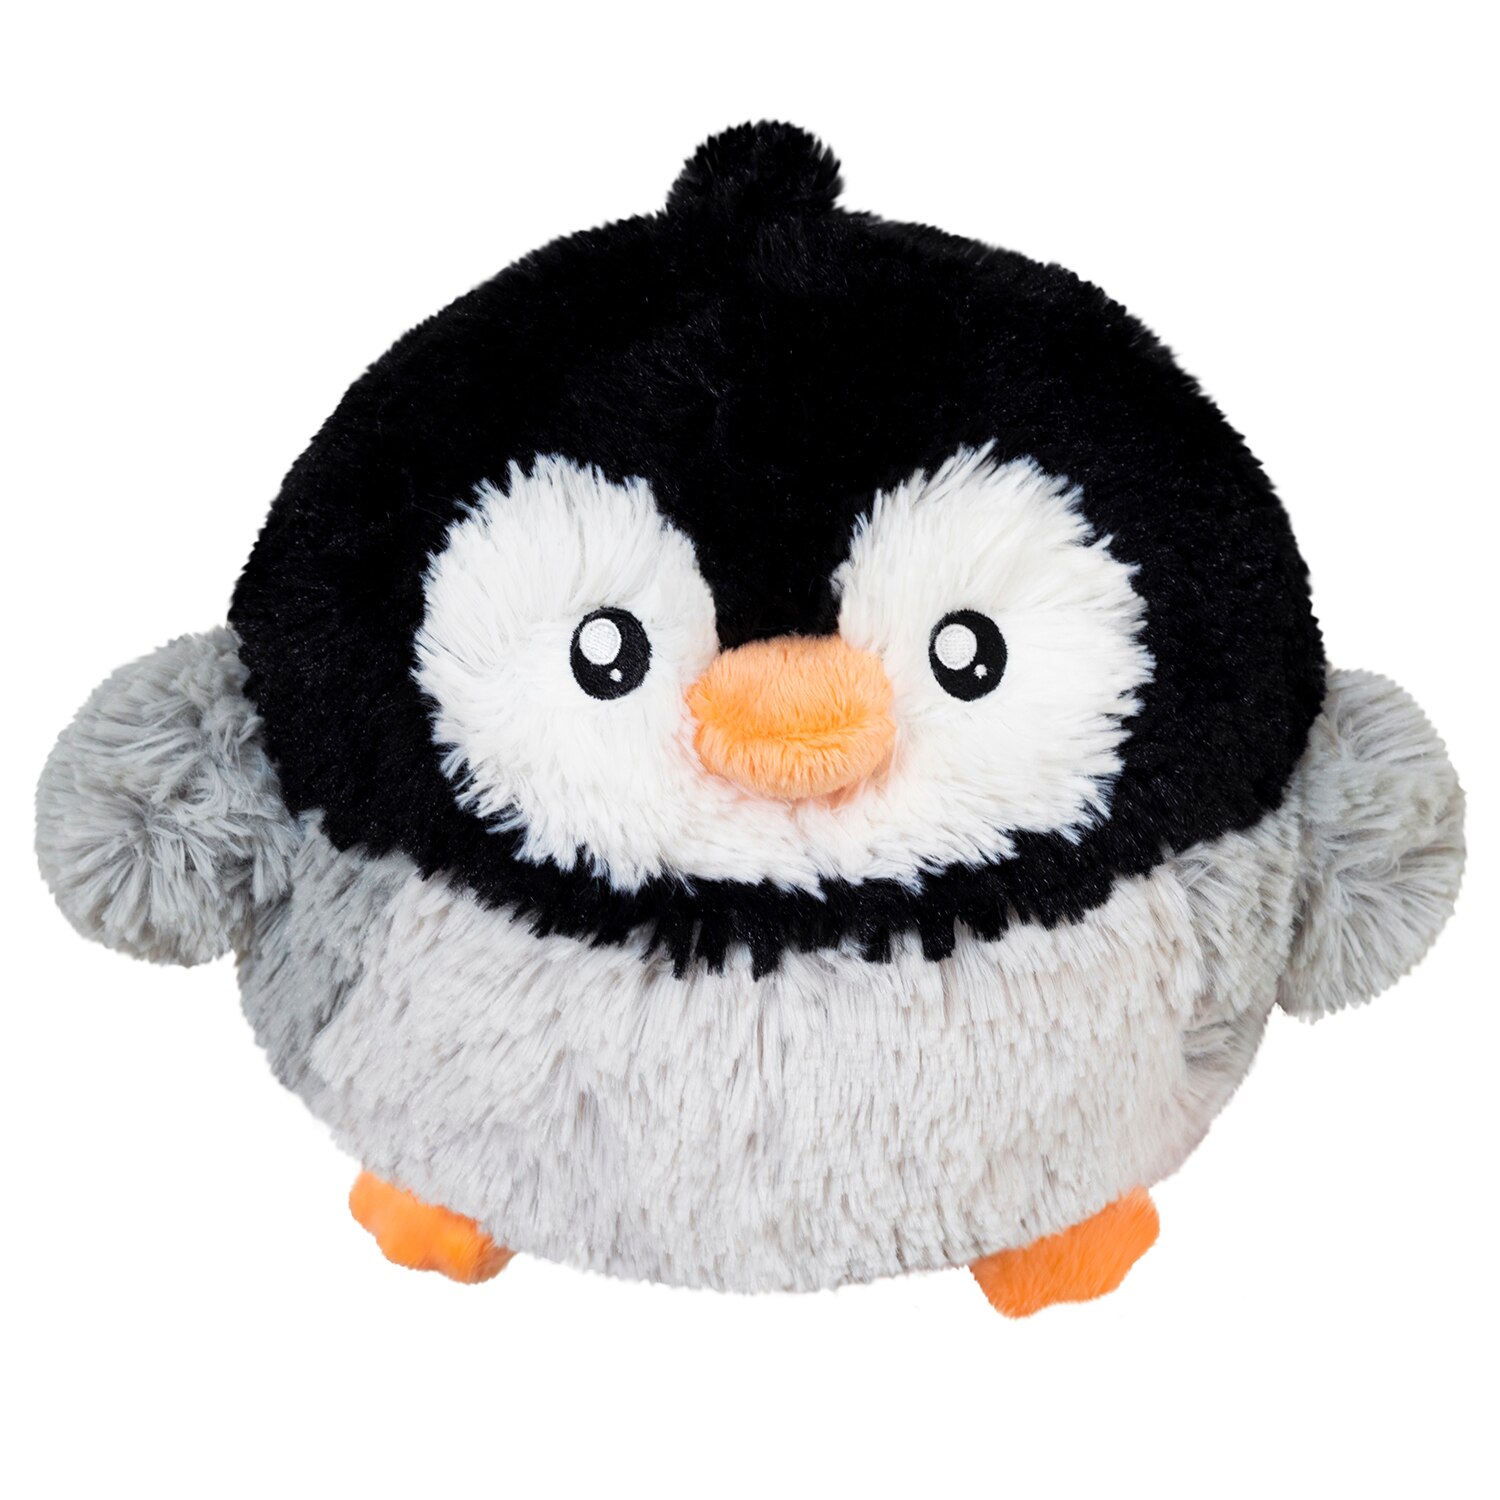 Mini Squishable Baby Penguin